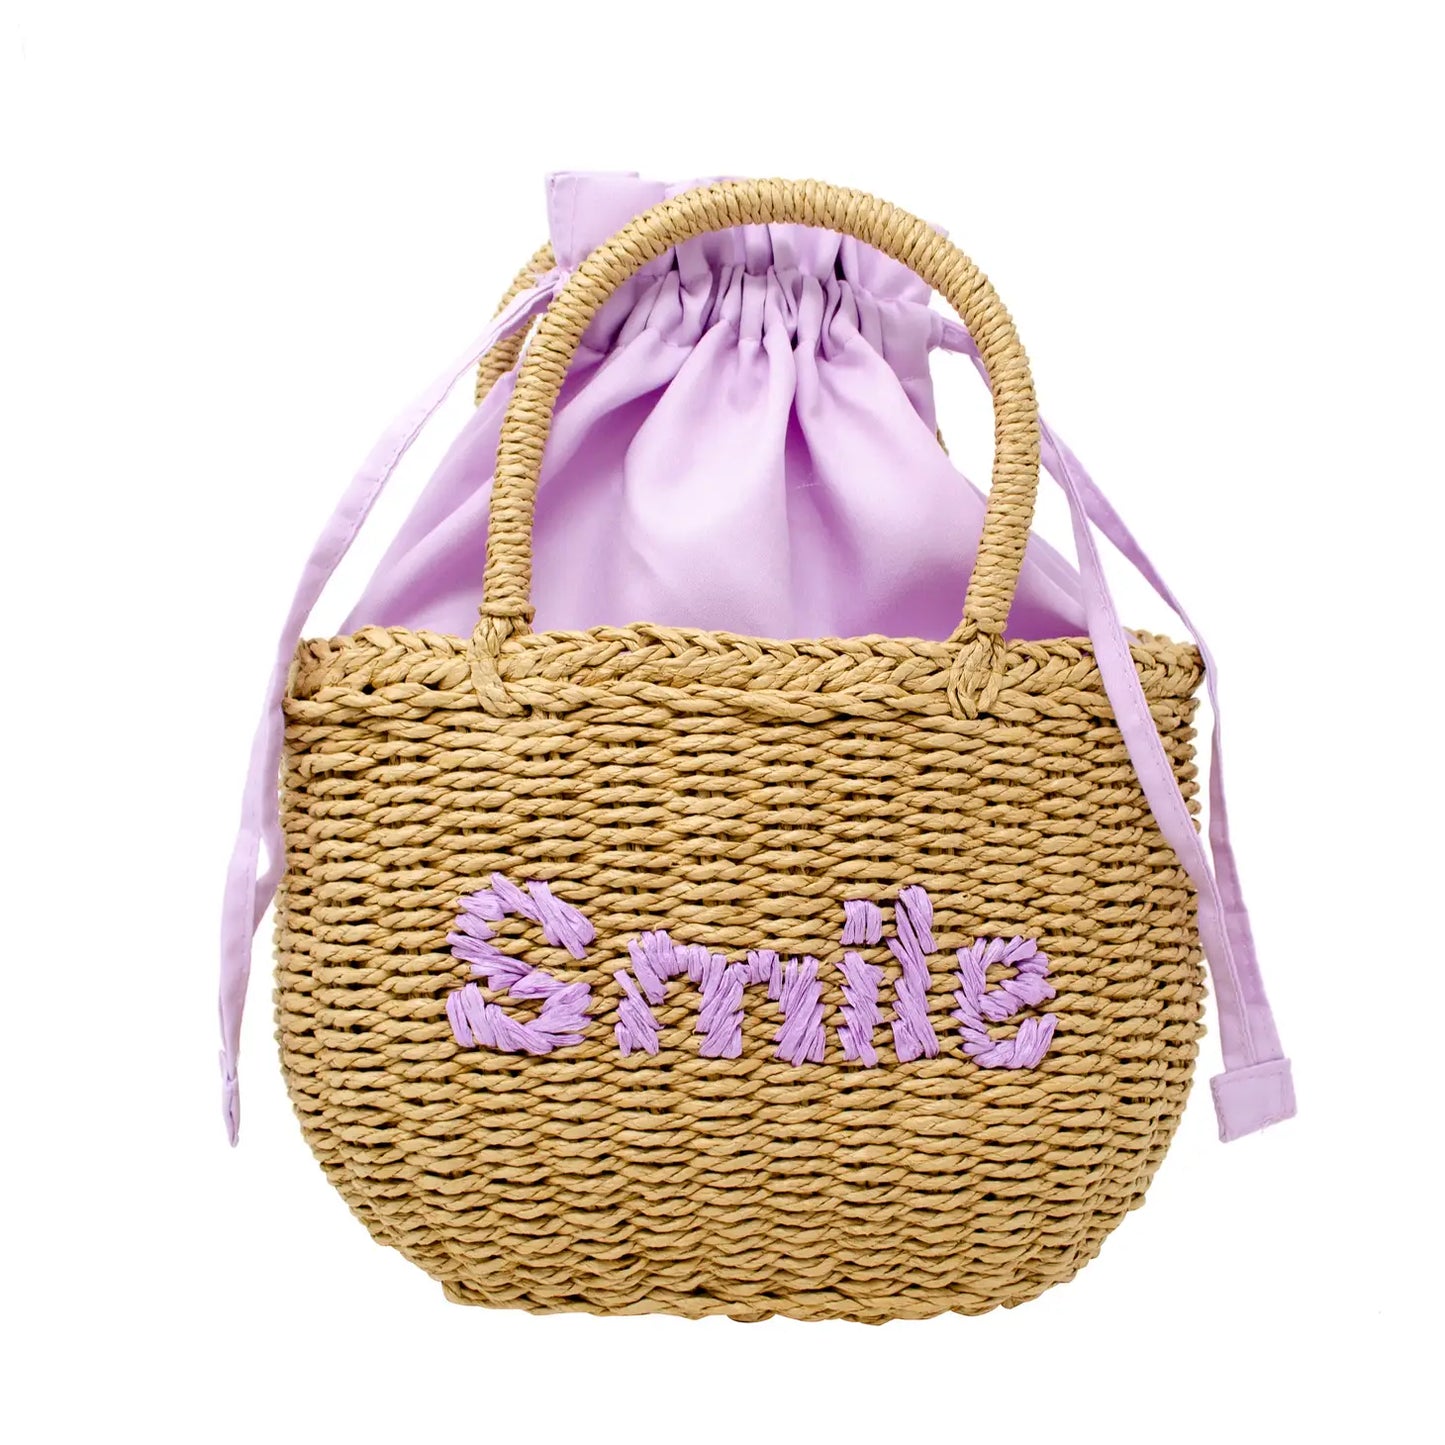 Wicker Basket "Smile" Bag - Purple